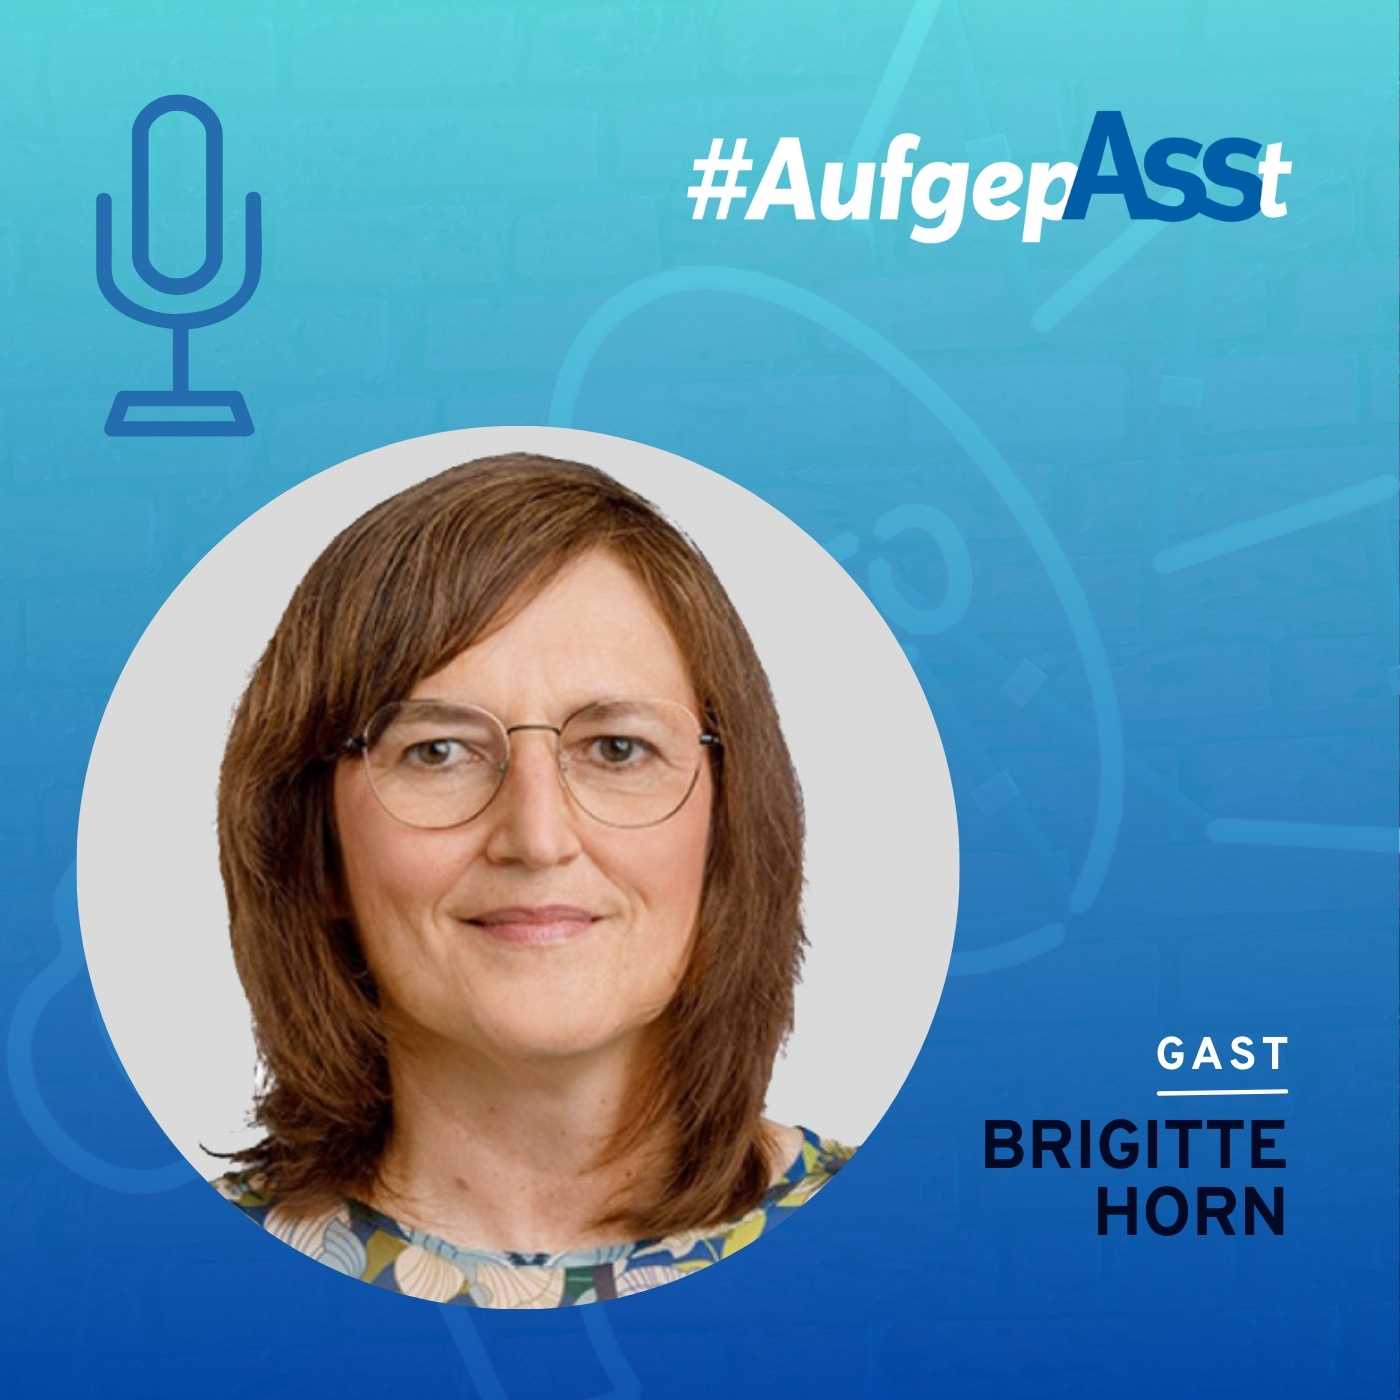 AufgepASSt - AssCompact im Gespräch mit Brigitte Horn